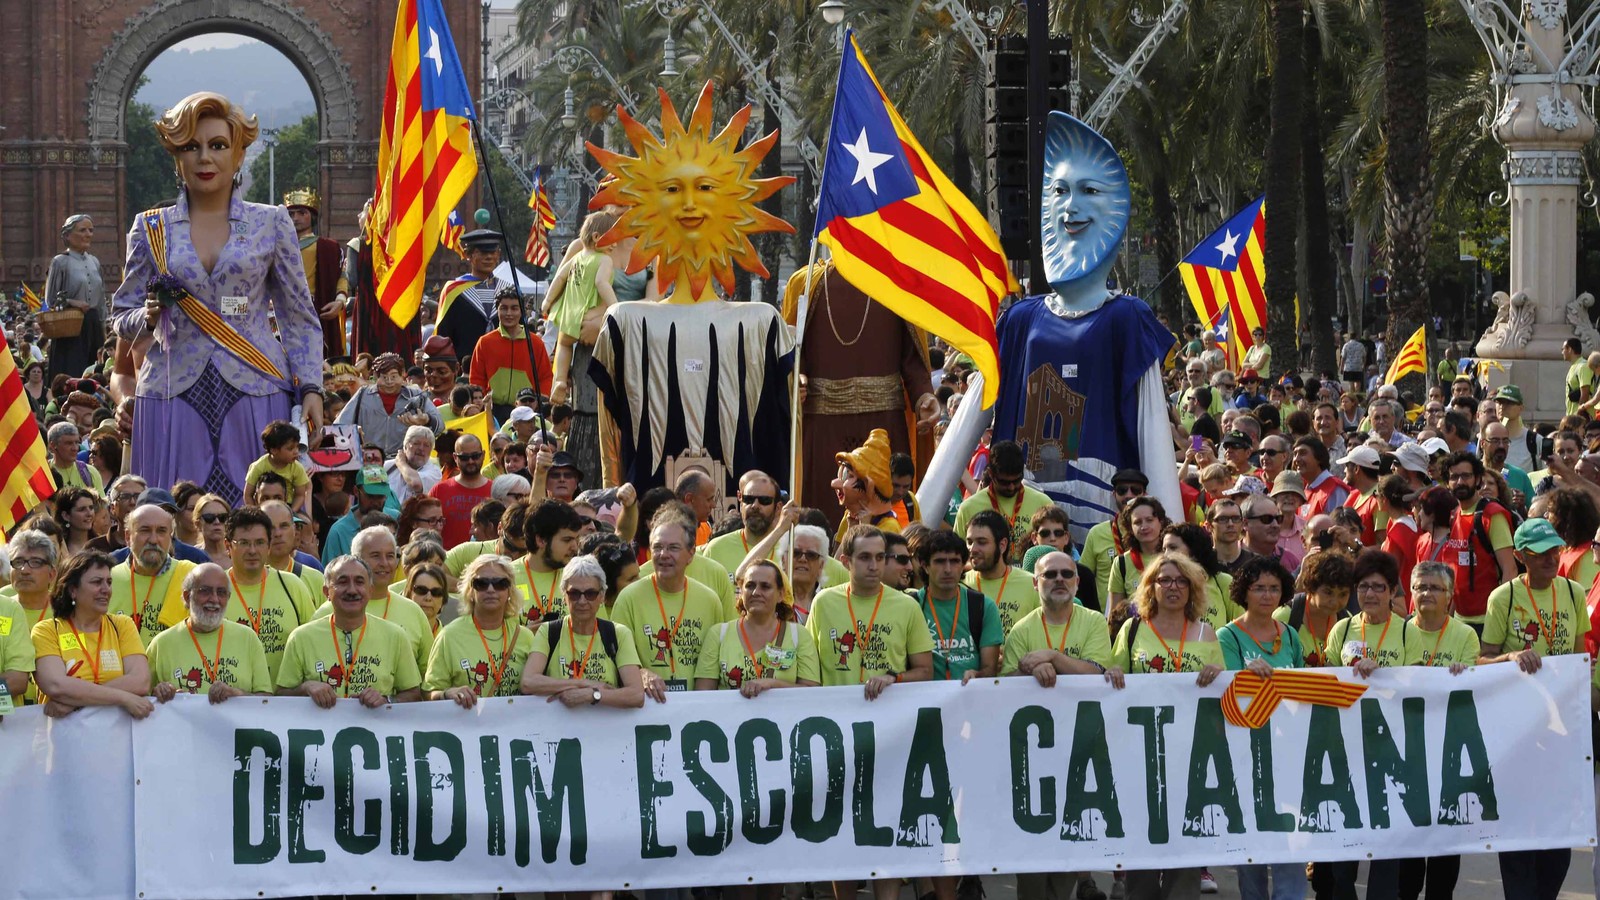 Speaking the Catalan Language in Barcelona - Don't They Speak Spanish?